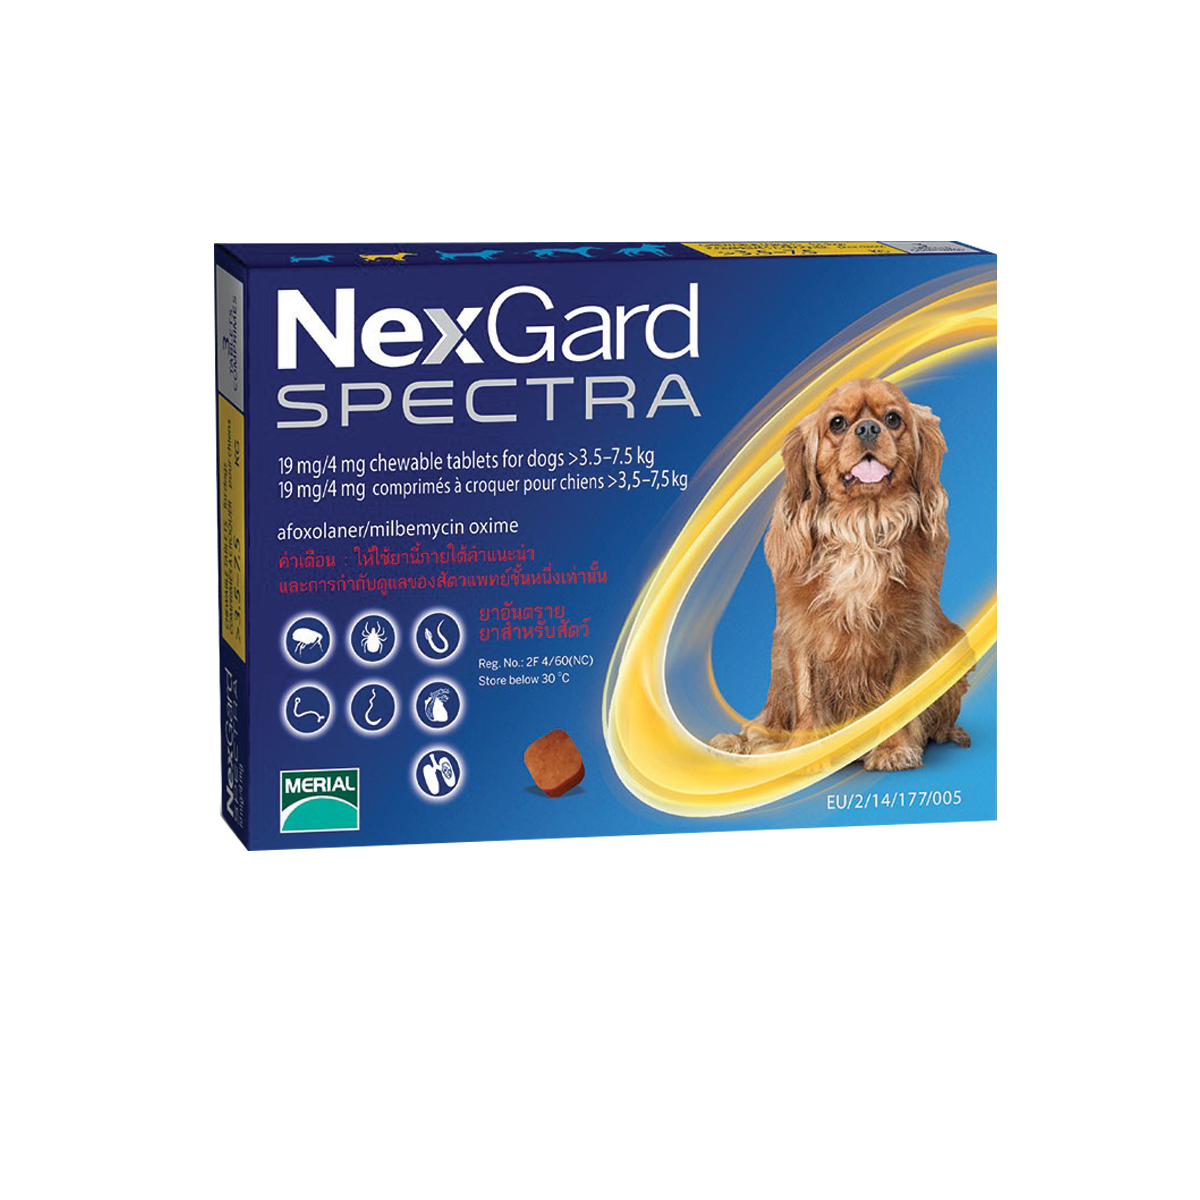 NexGard Spectra Chewable Tablets For Small Dogs เน็กการ์ด สเป็คต้าร์ ยากำจัดเห็บ หมัด สุนัข ชนิดเม็ดเคี้ยว สำหรับสุนัขที่มีน้ำหนัก 3.5-7.5 กิโลกรัม